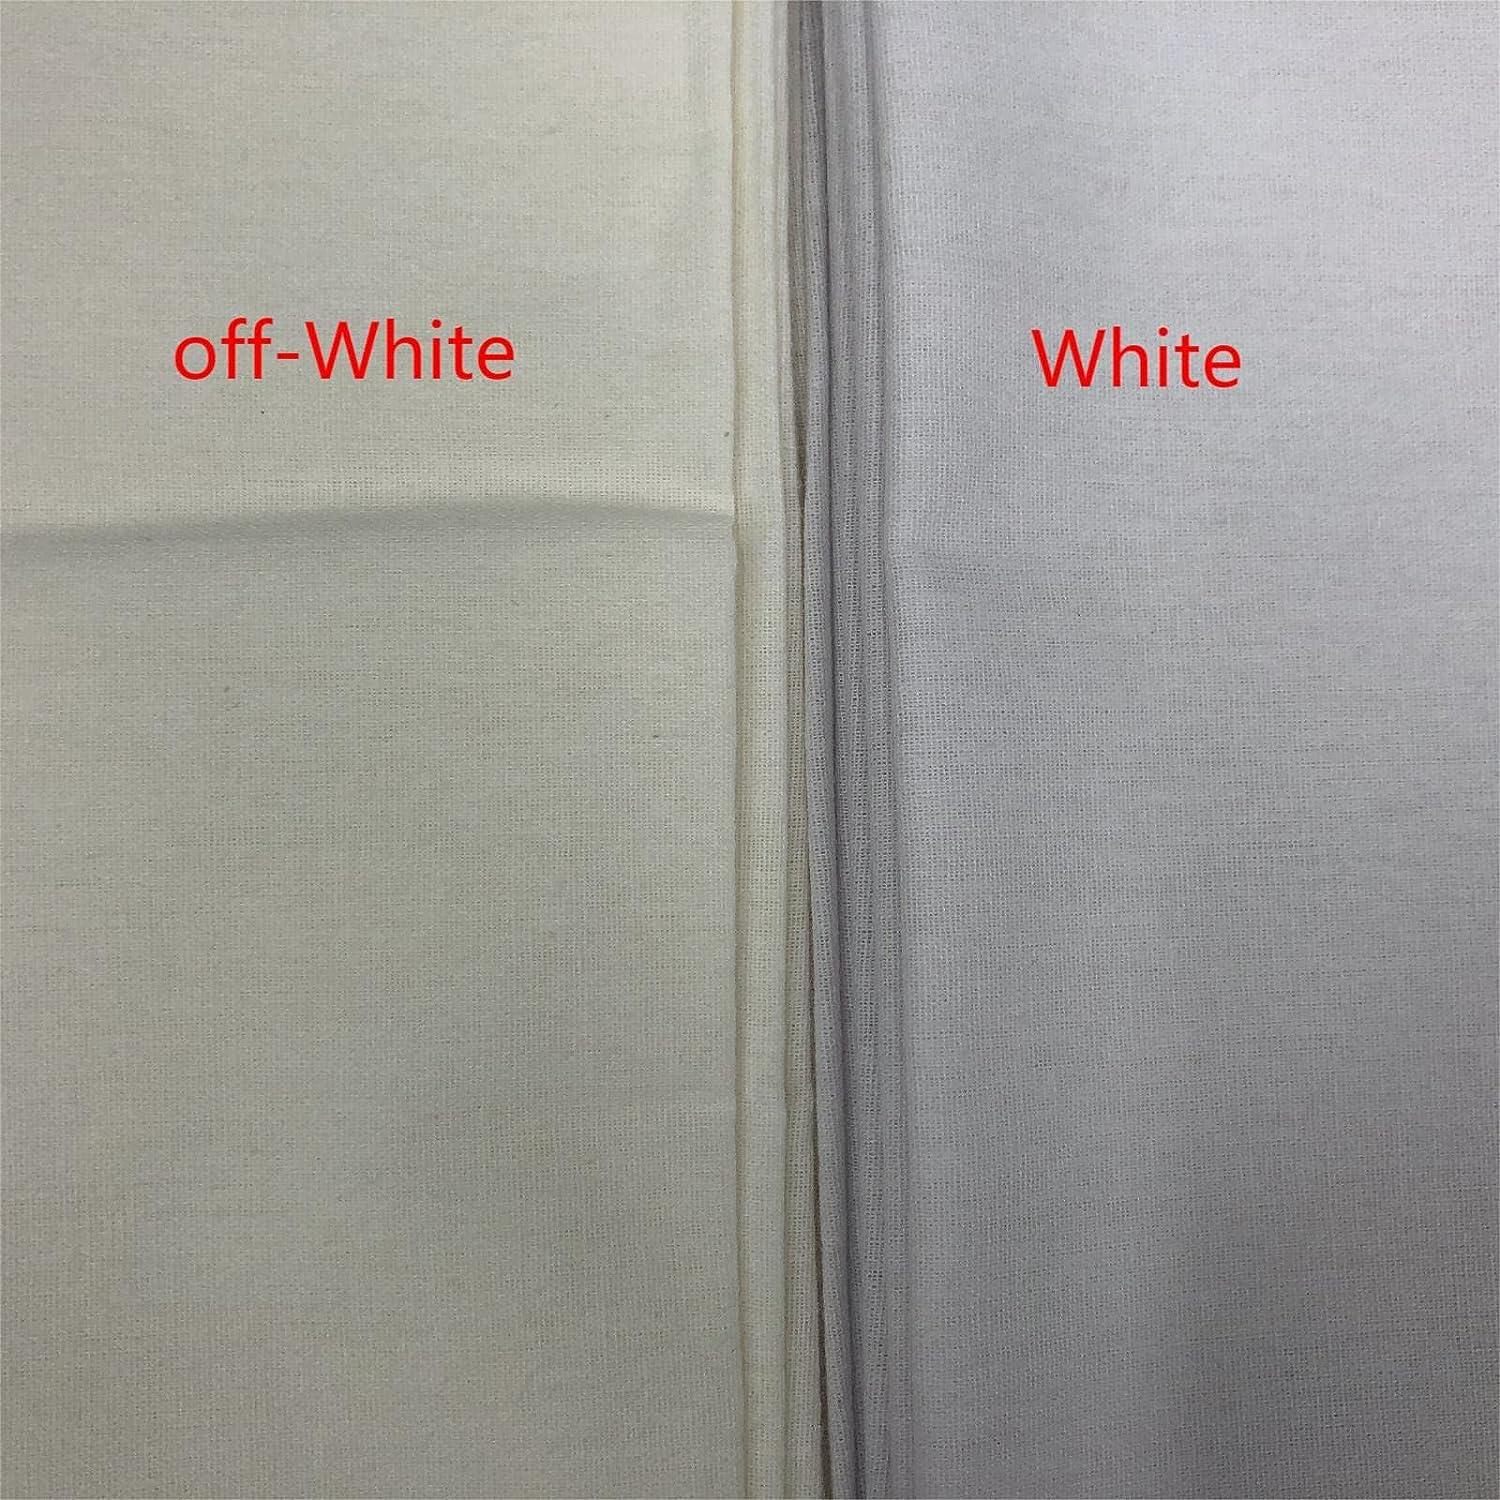 PLANTIONAL Medium Weight White Iron-On Non-Woven Fusible Interfacing: 11.6  x